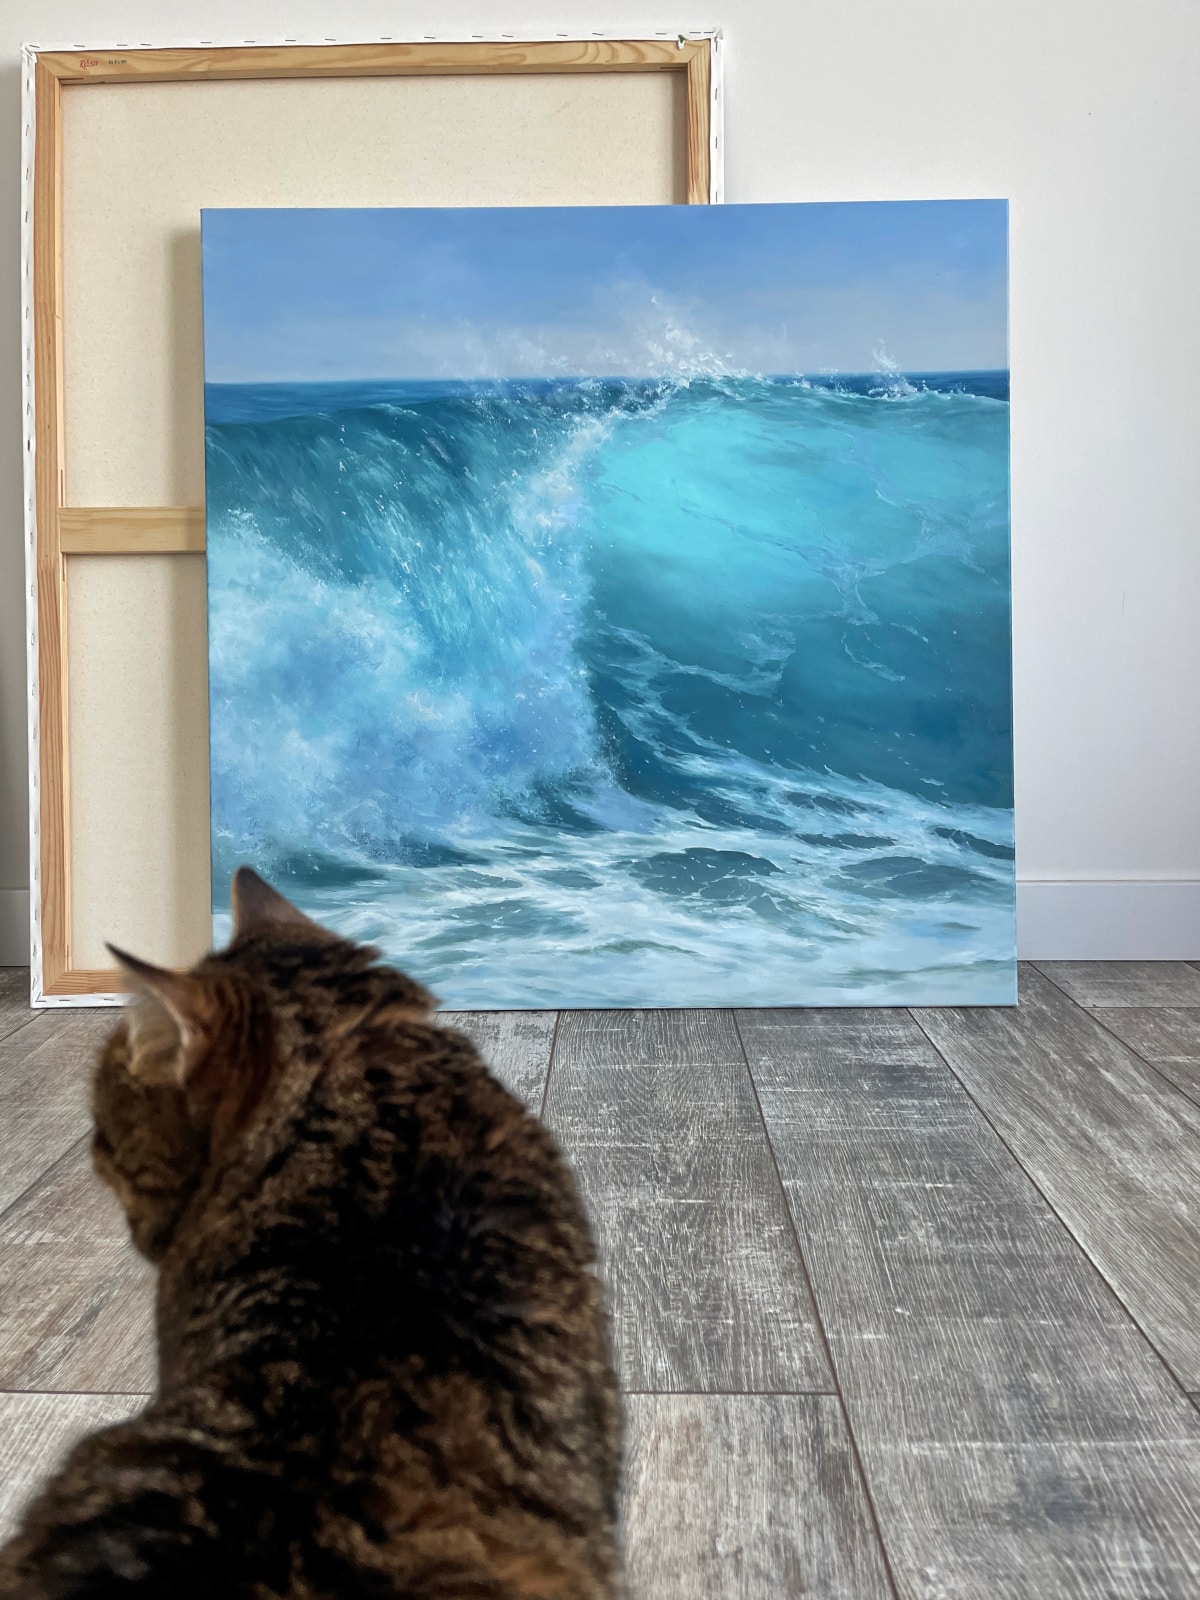 Artist Alexandra Velichko poses with ocean paintings